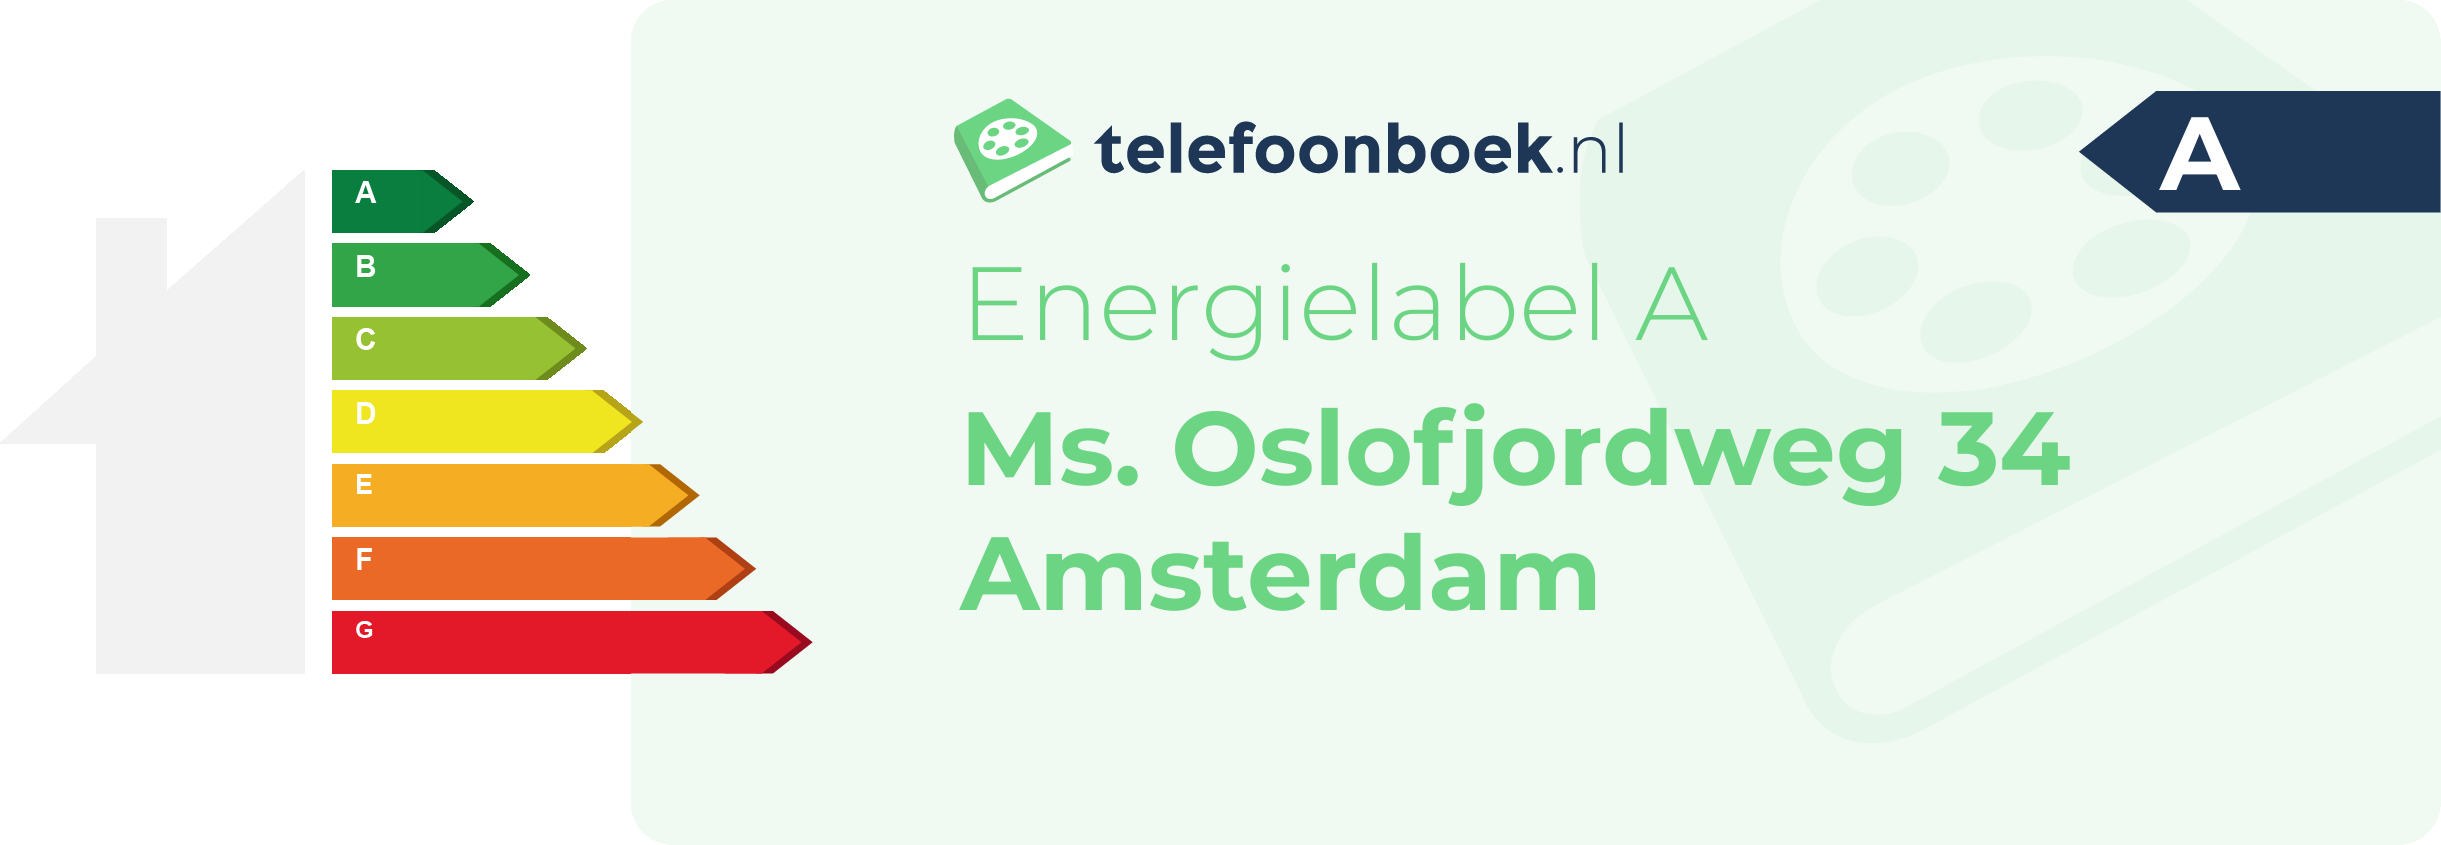 Energielabel Ms. Oslofjordweg 34 Amsterdam